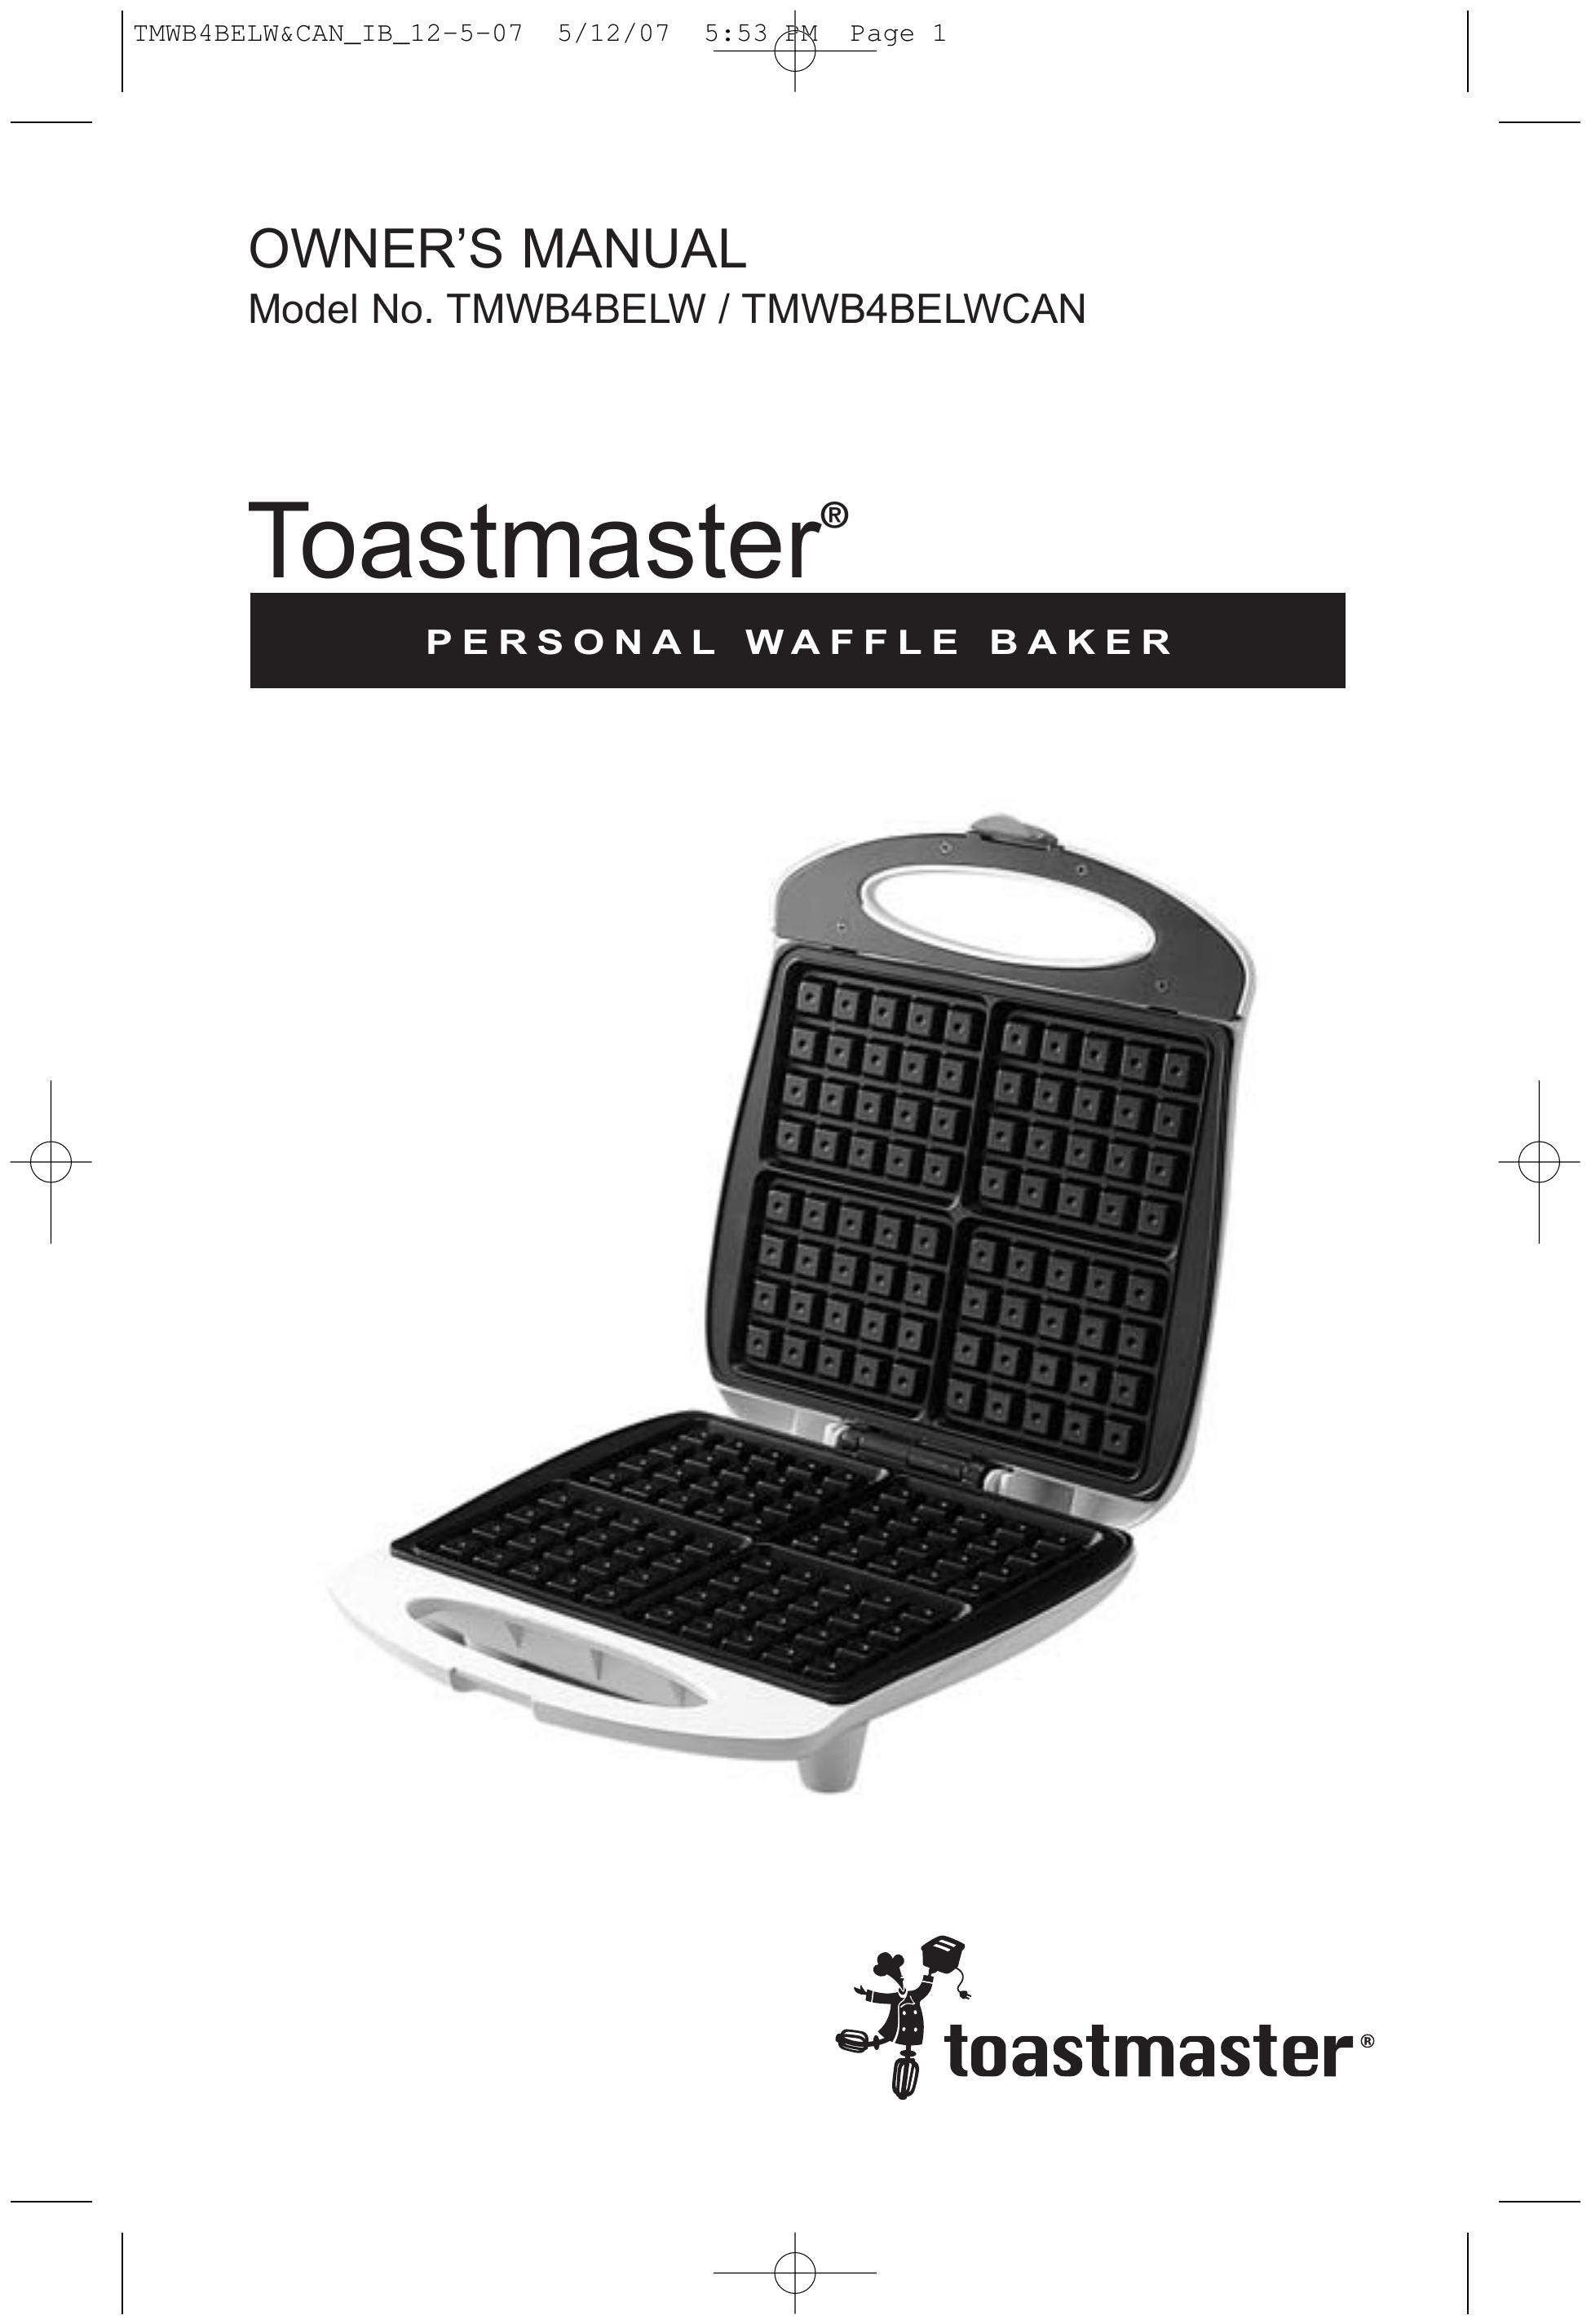 Toastmaster TMWB4BELWCAN Waffle Iron User Manual